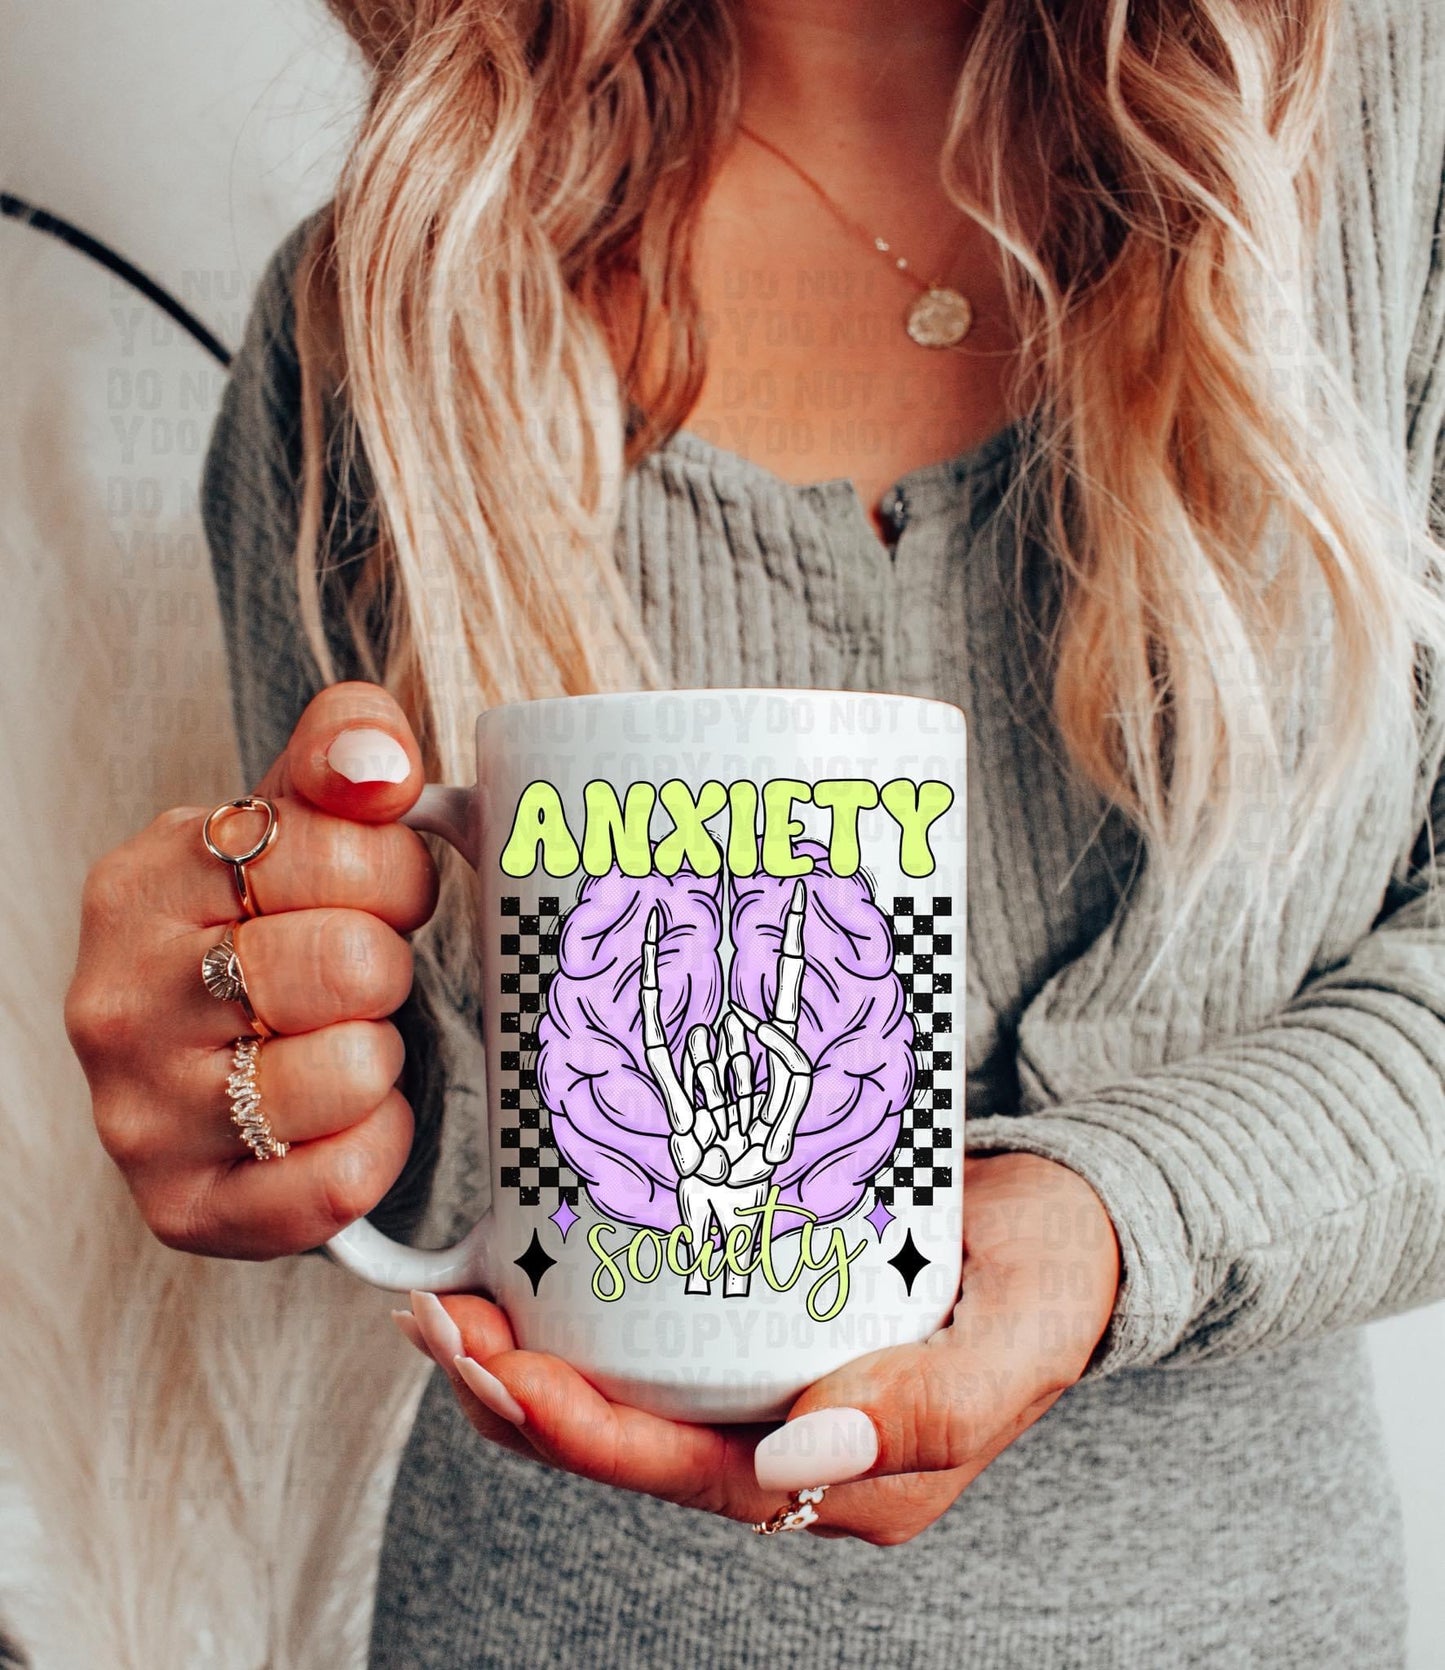 Anxiety social club UV decal